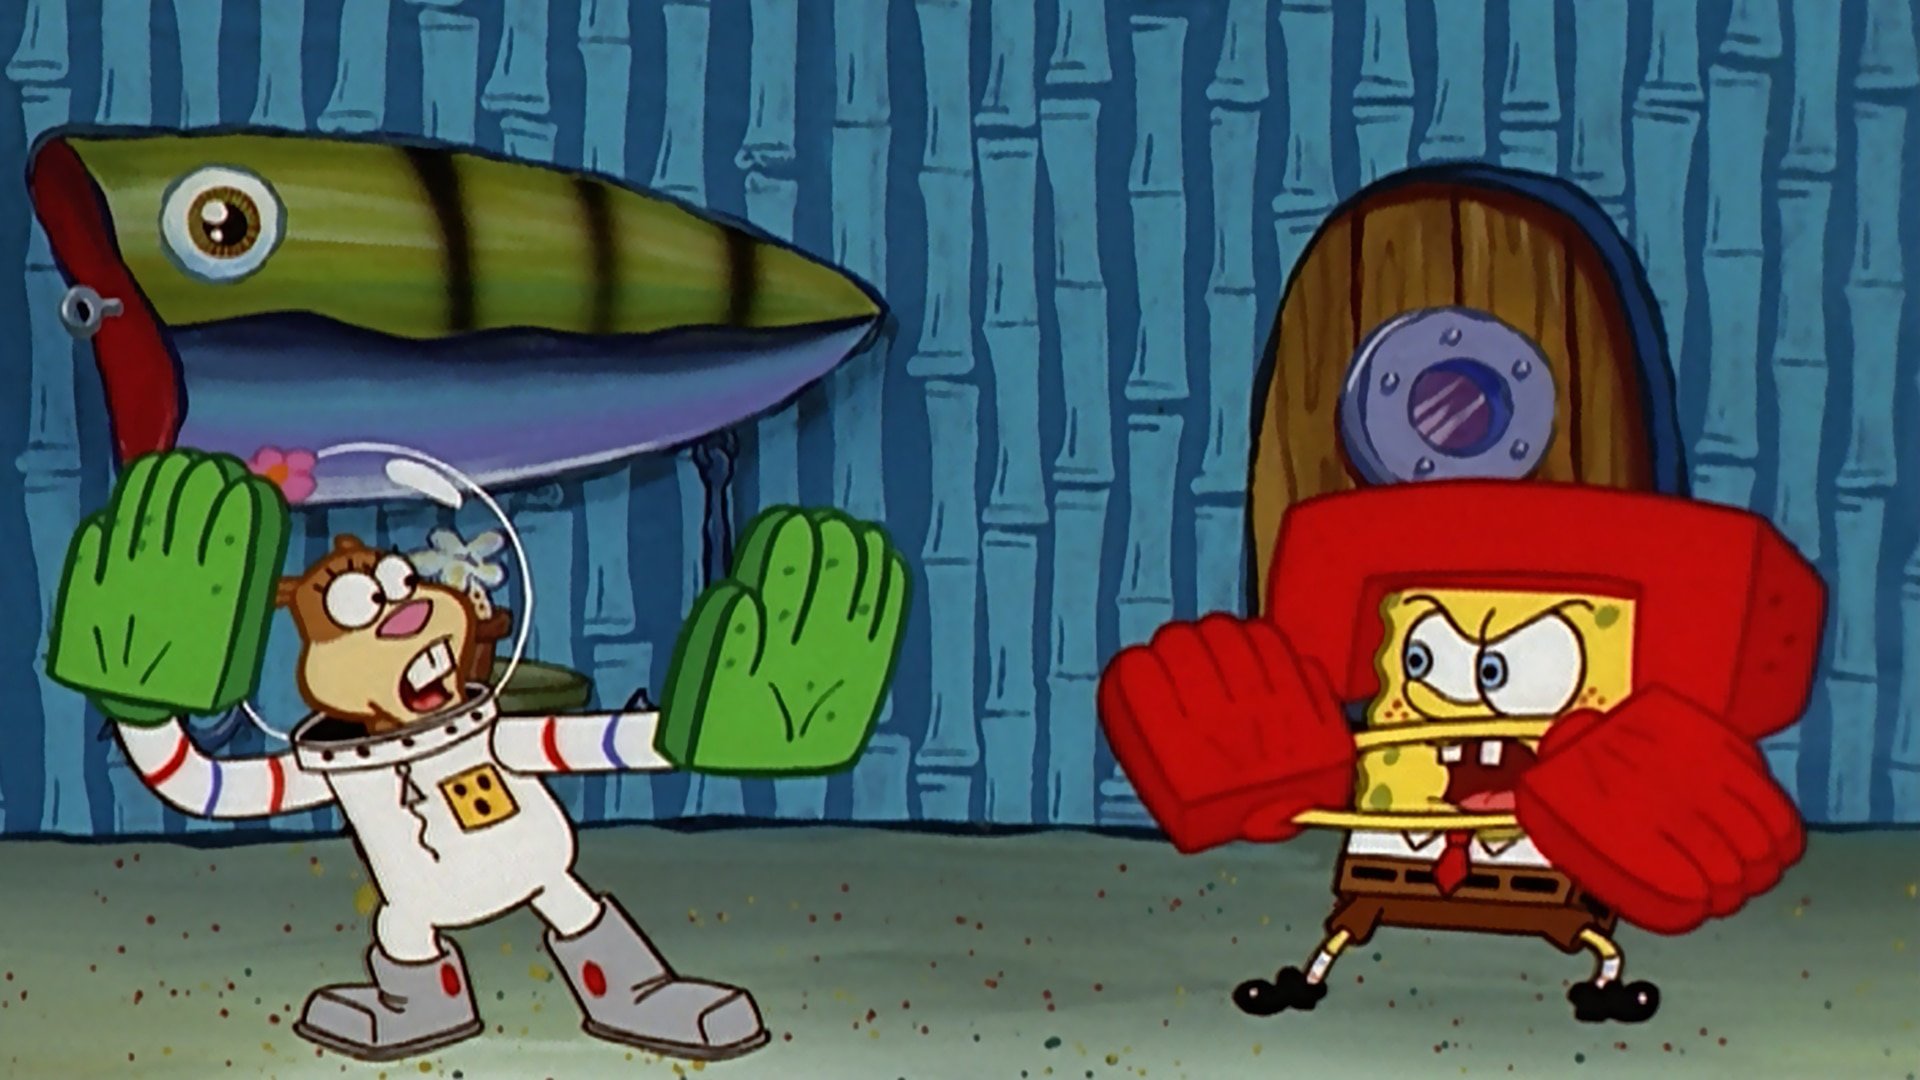 watch full episodes of spongebob squarepants season 1